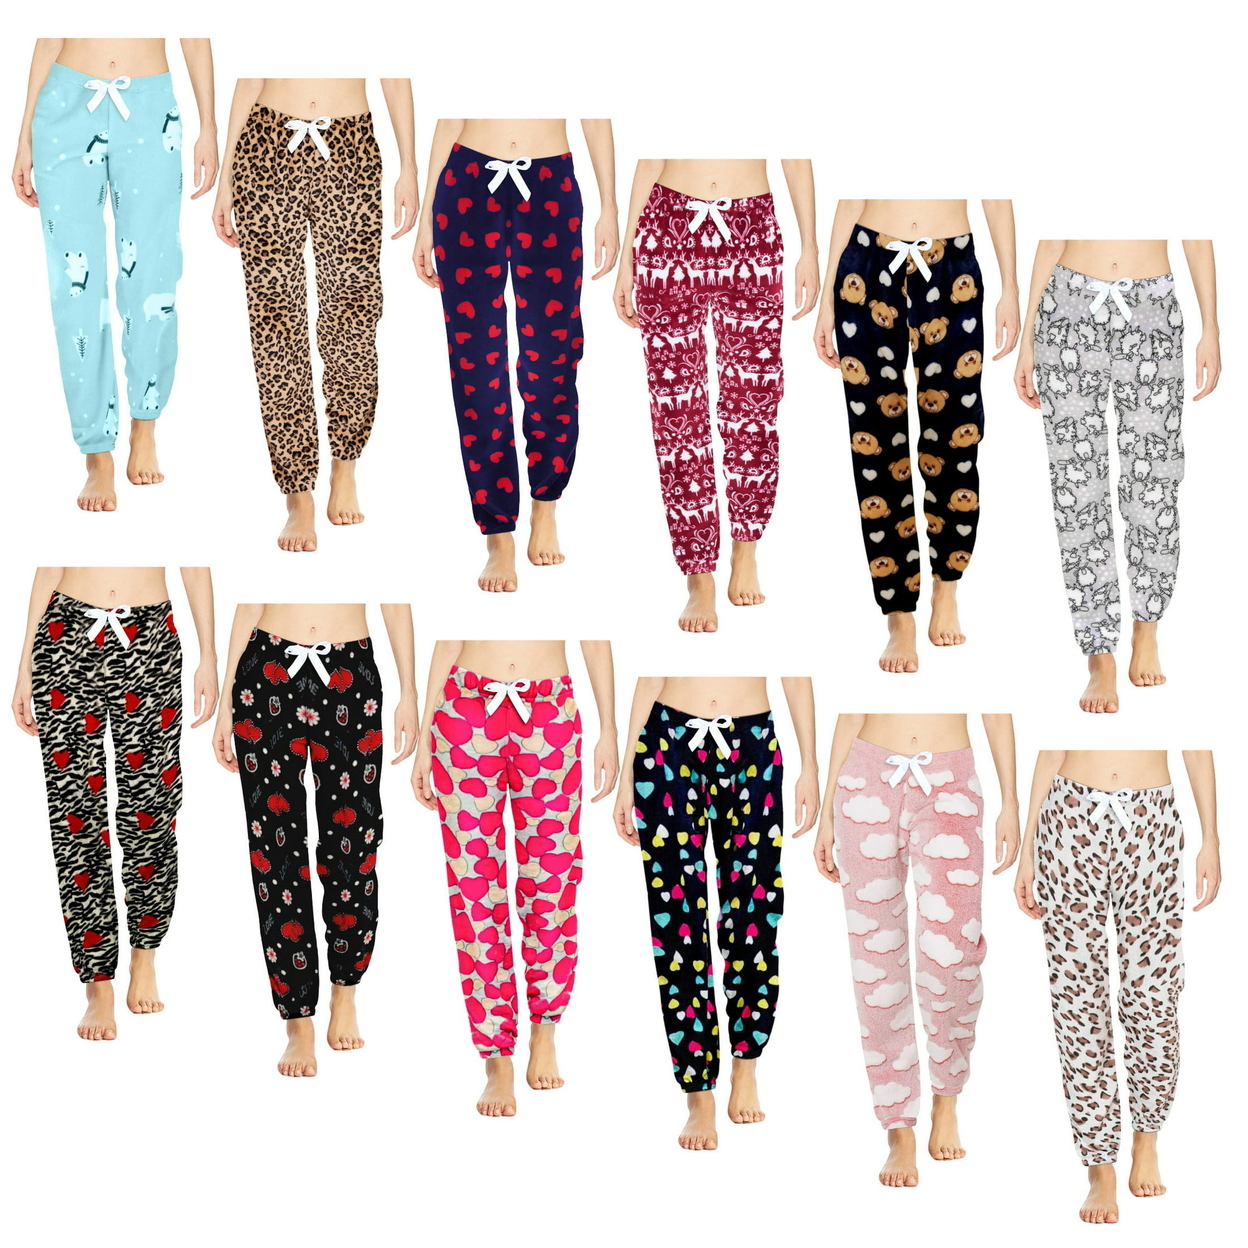 4-Pack: Women's Printed Ultra-Soft Comfy Stretch Micro-Fleece Pajama Lounge Pants - Medium, Animal